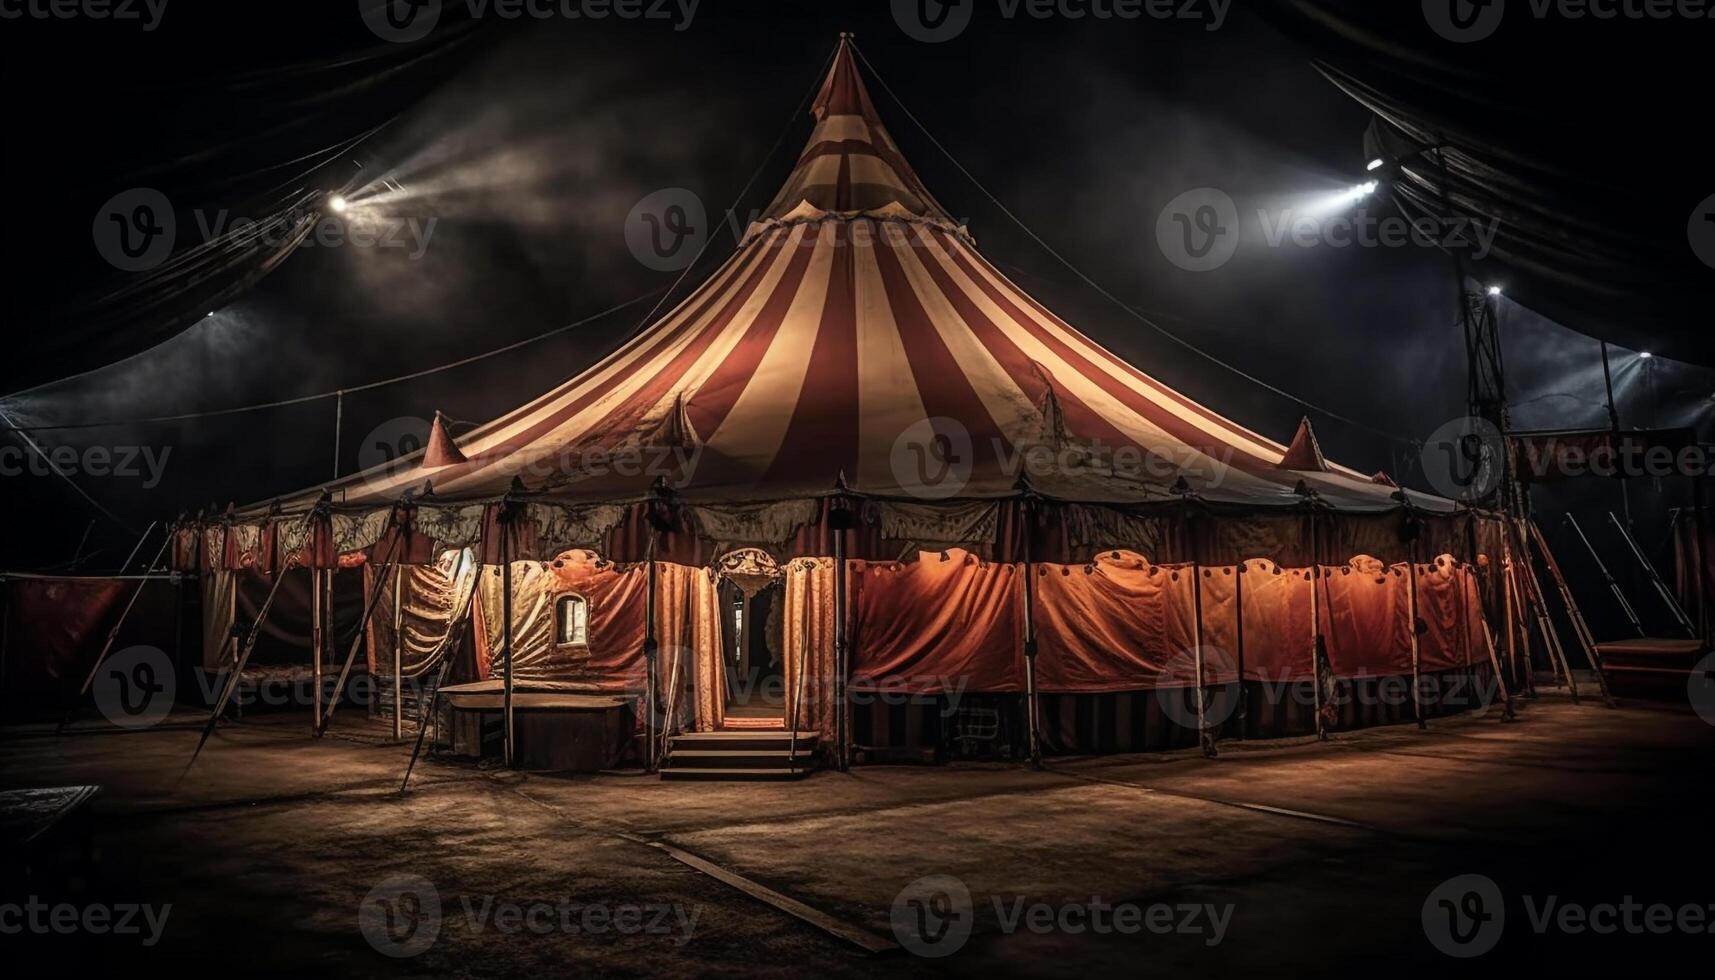 Colorful tent illuminates joyous outdoor music festival celebration generated by AI photo